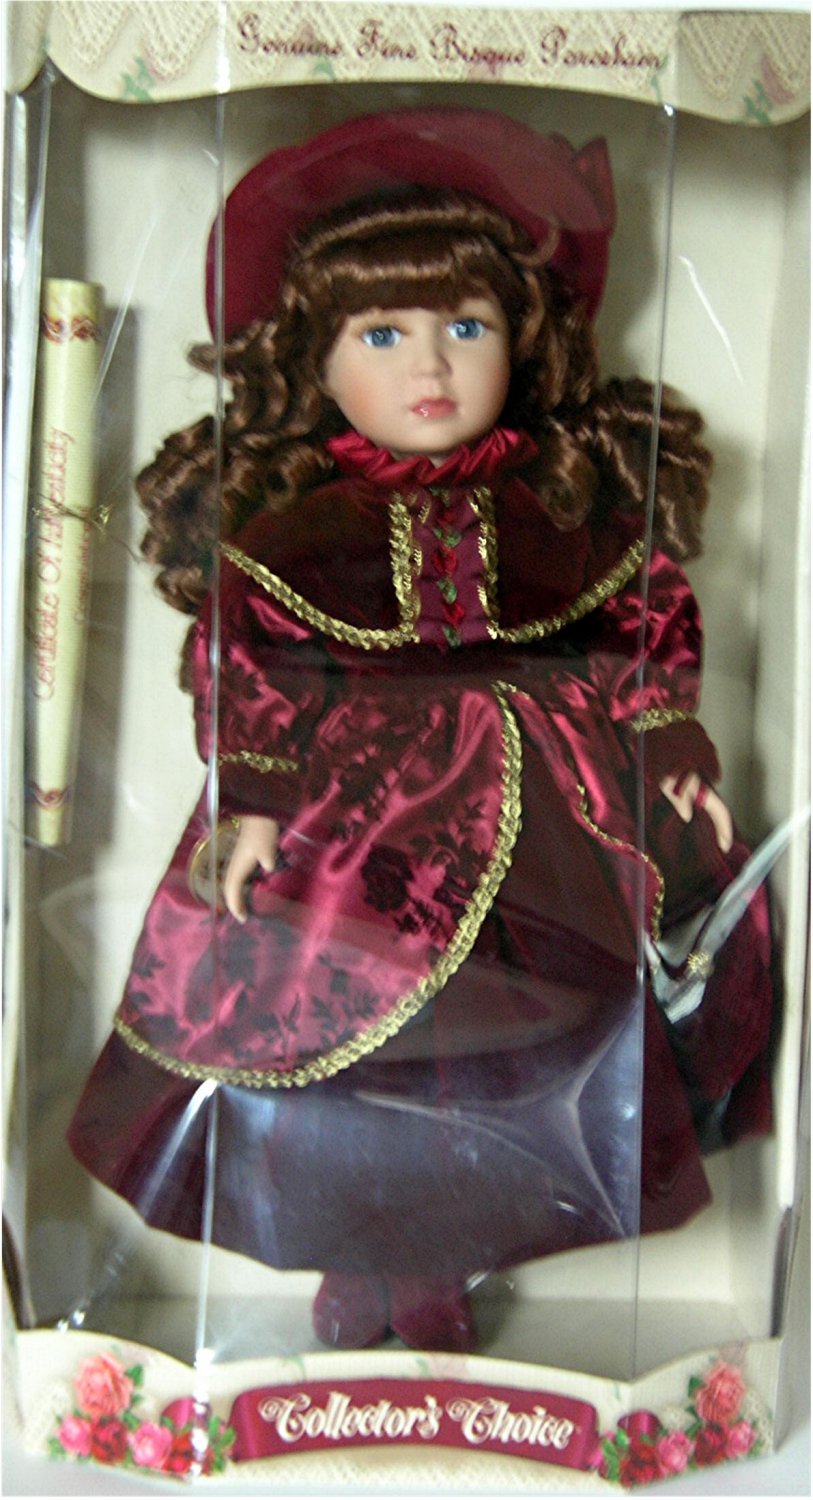 Alexander Doll Company - Wikipedia